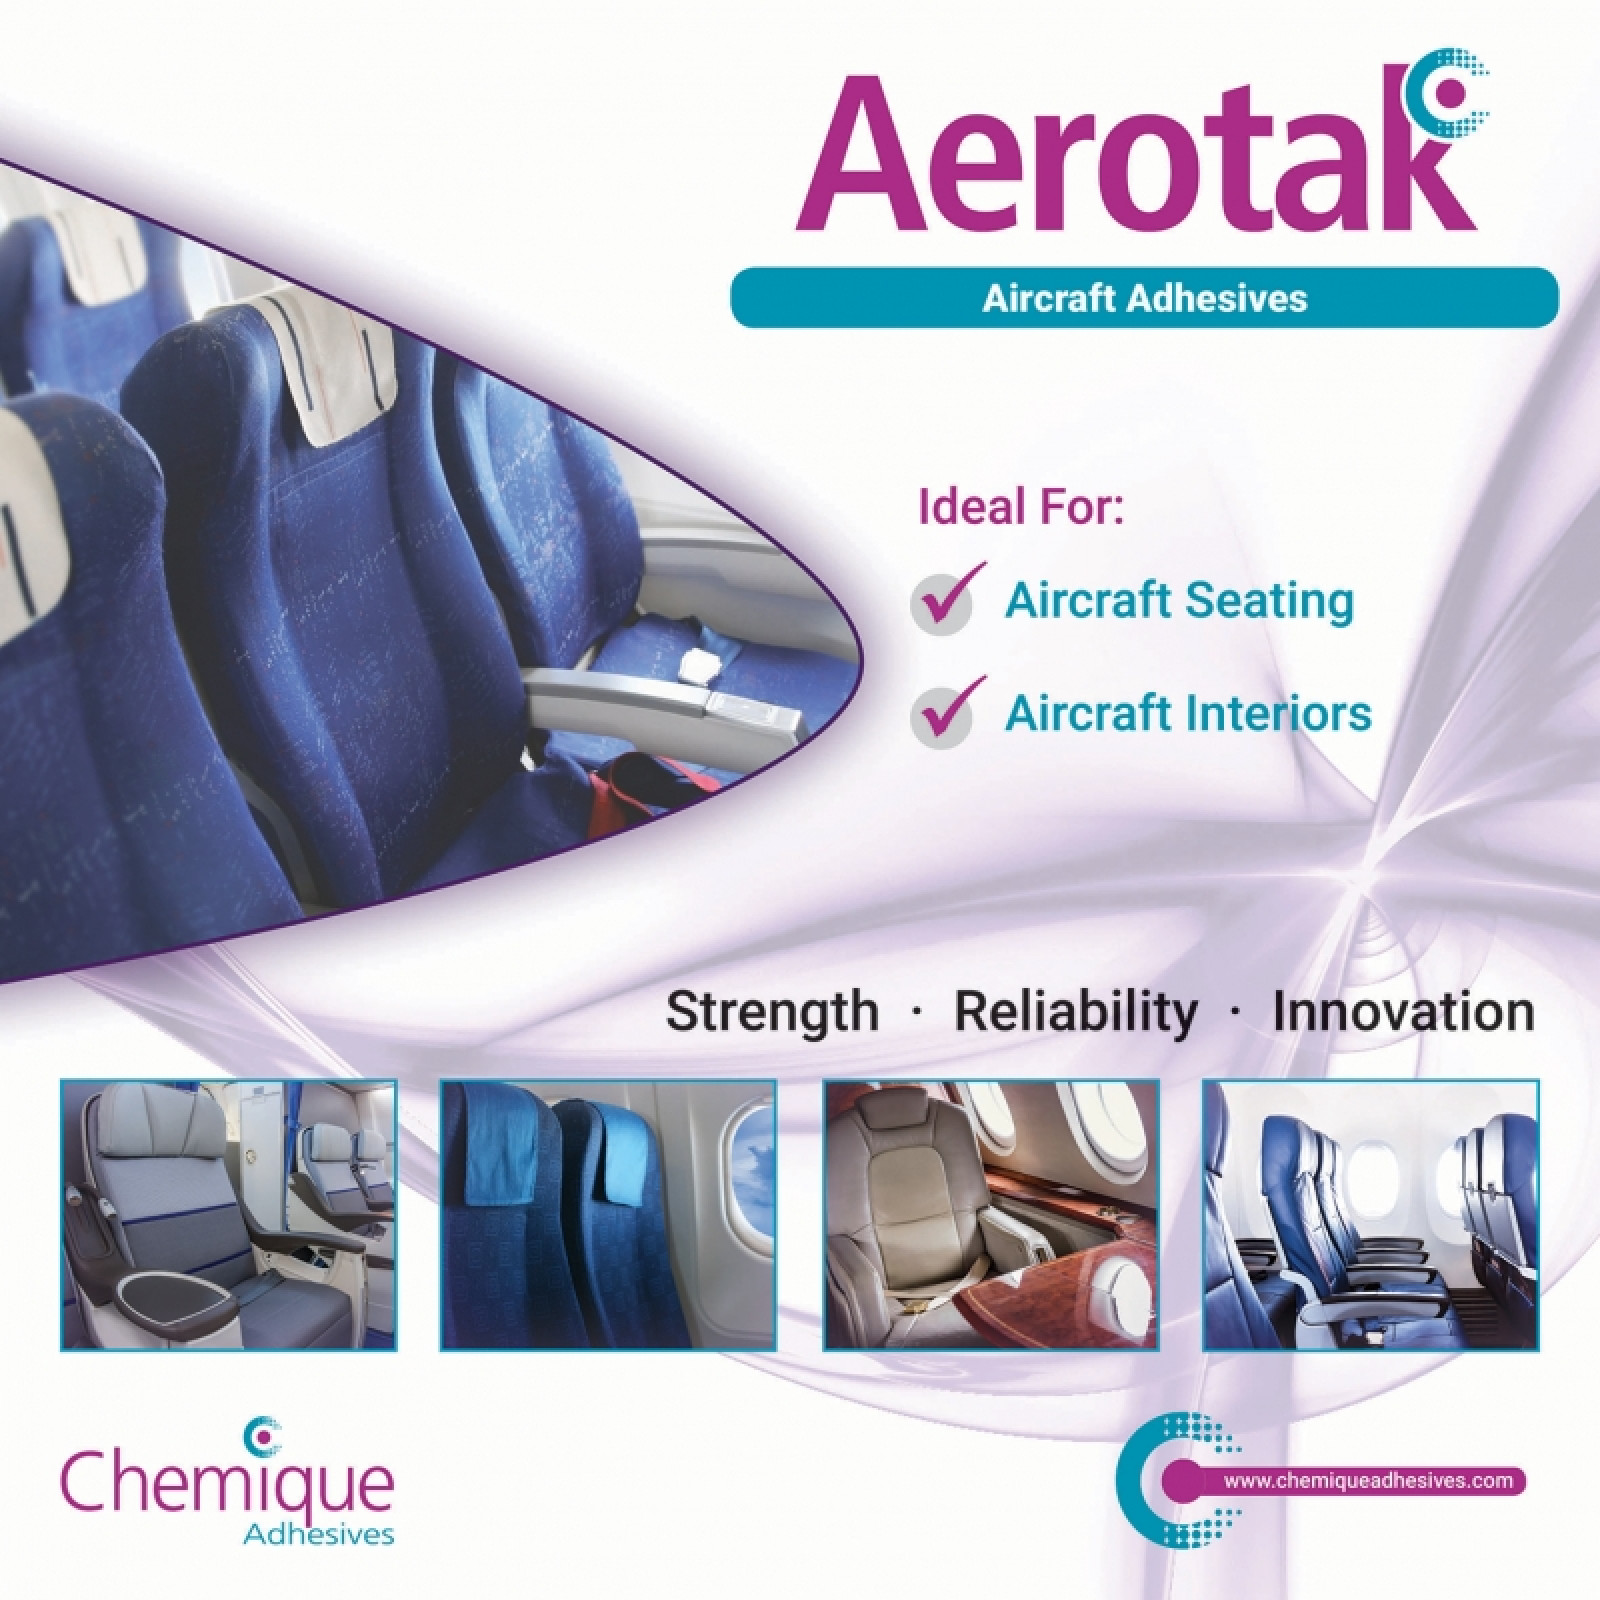 Chemique Adhesives launches Aerotak - a new range...